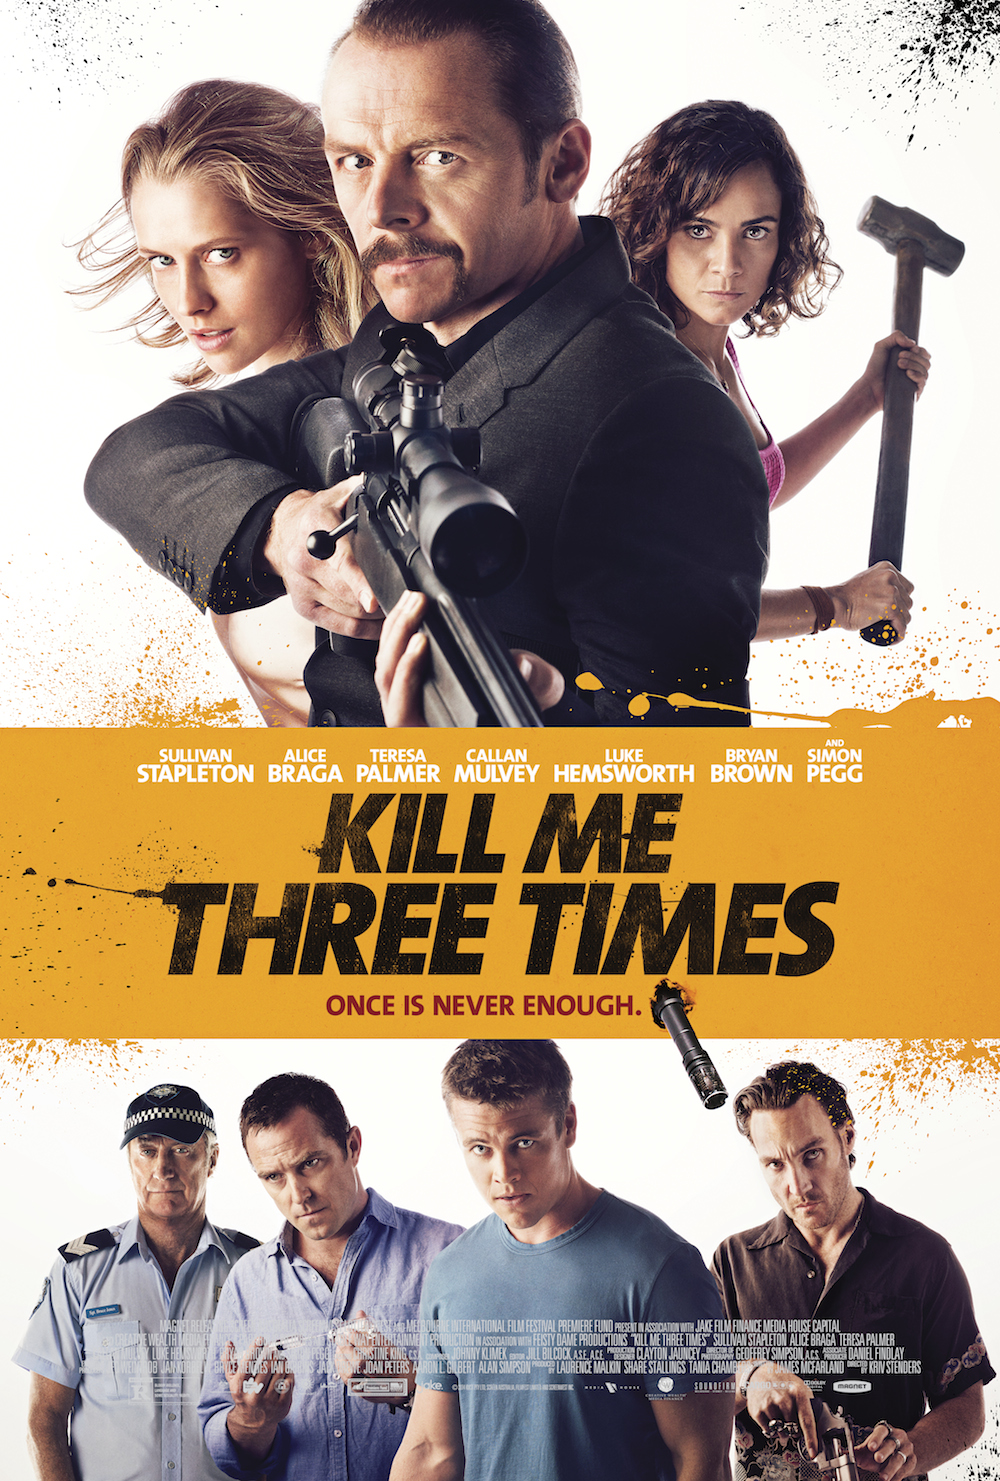 Simon Pegg in Kill Me Three Times (2014)